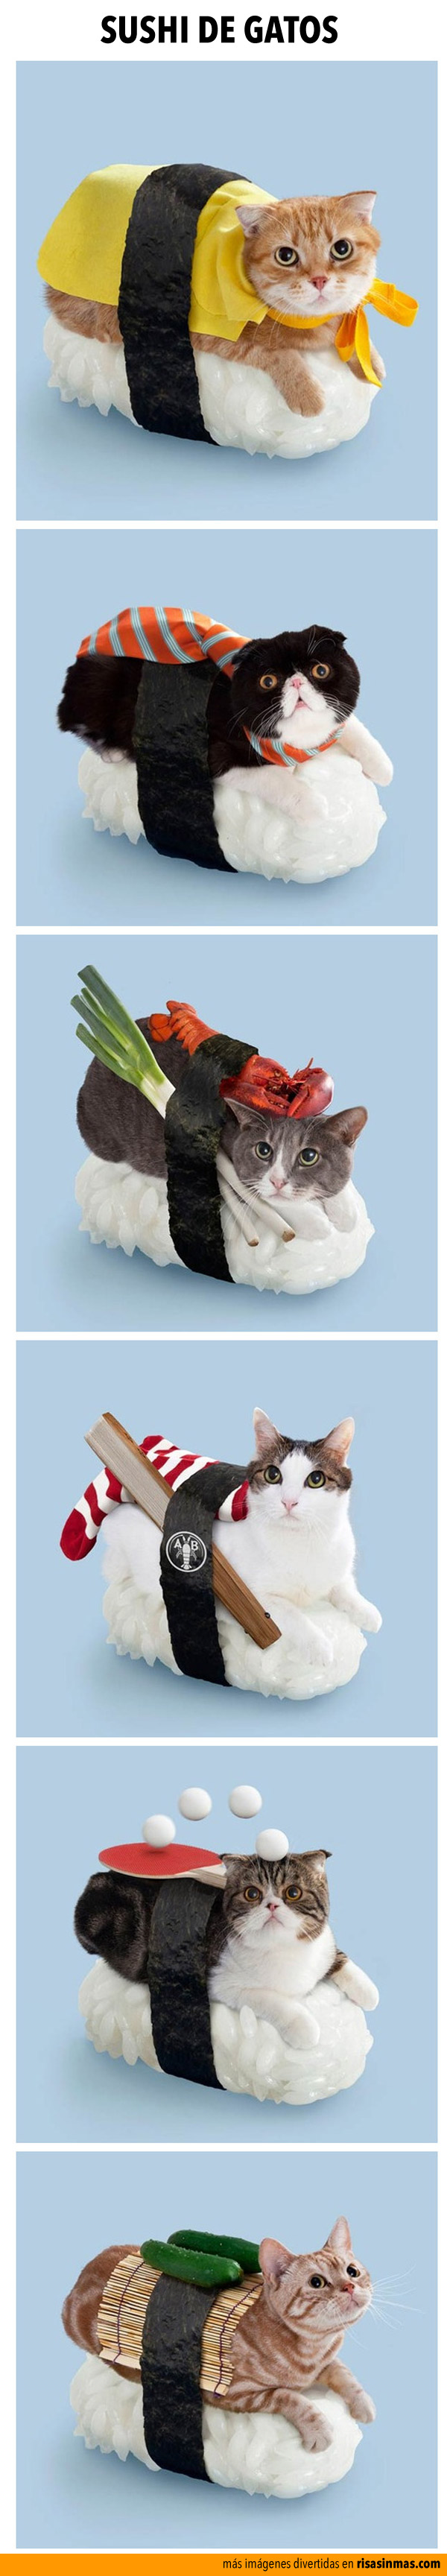 Sushi de gatos